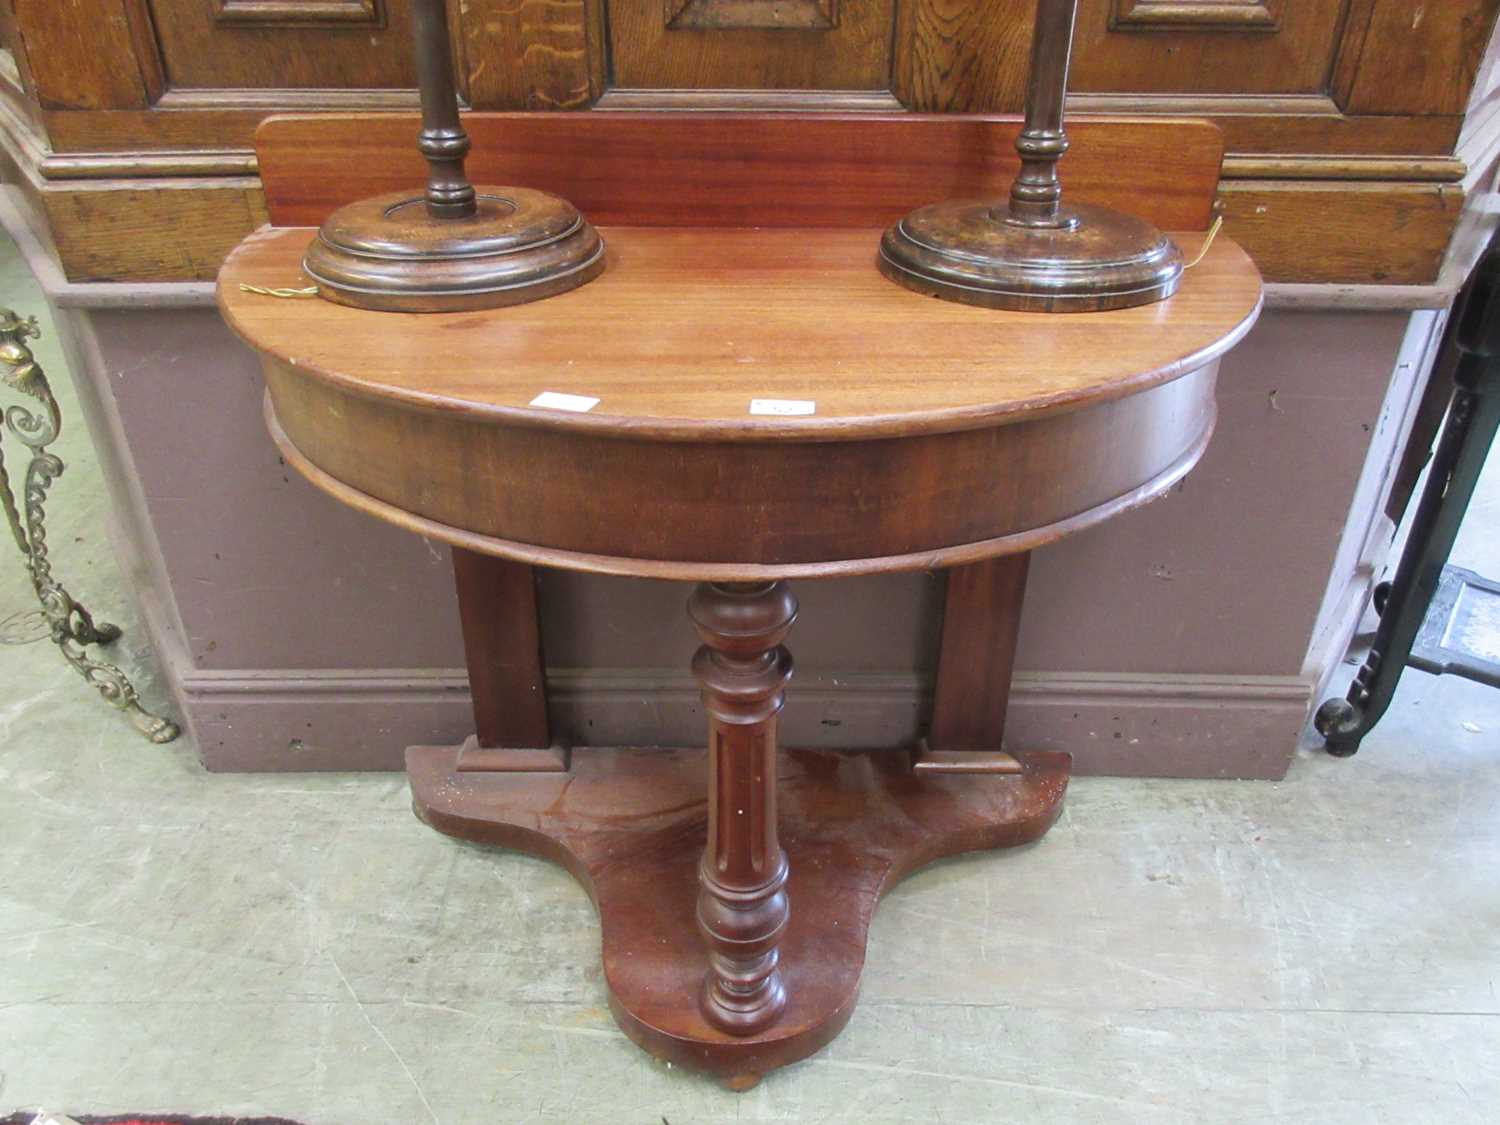 A 19th century mahogany demi-lune side table